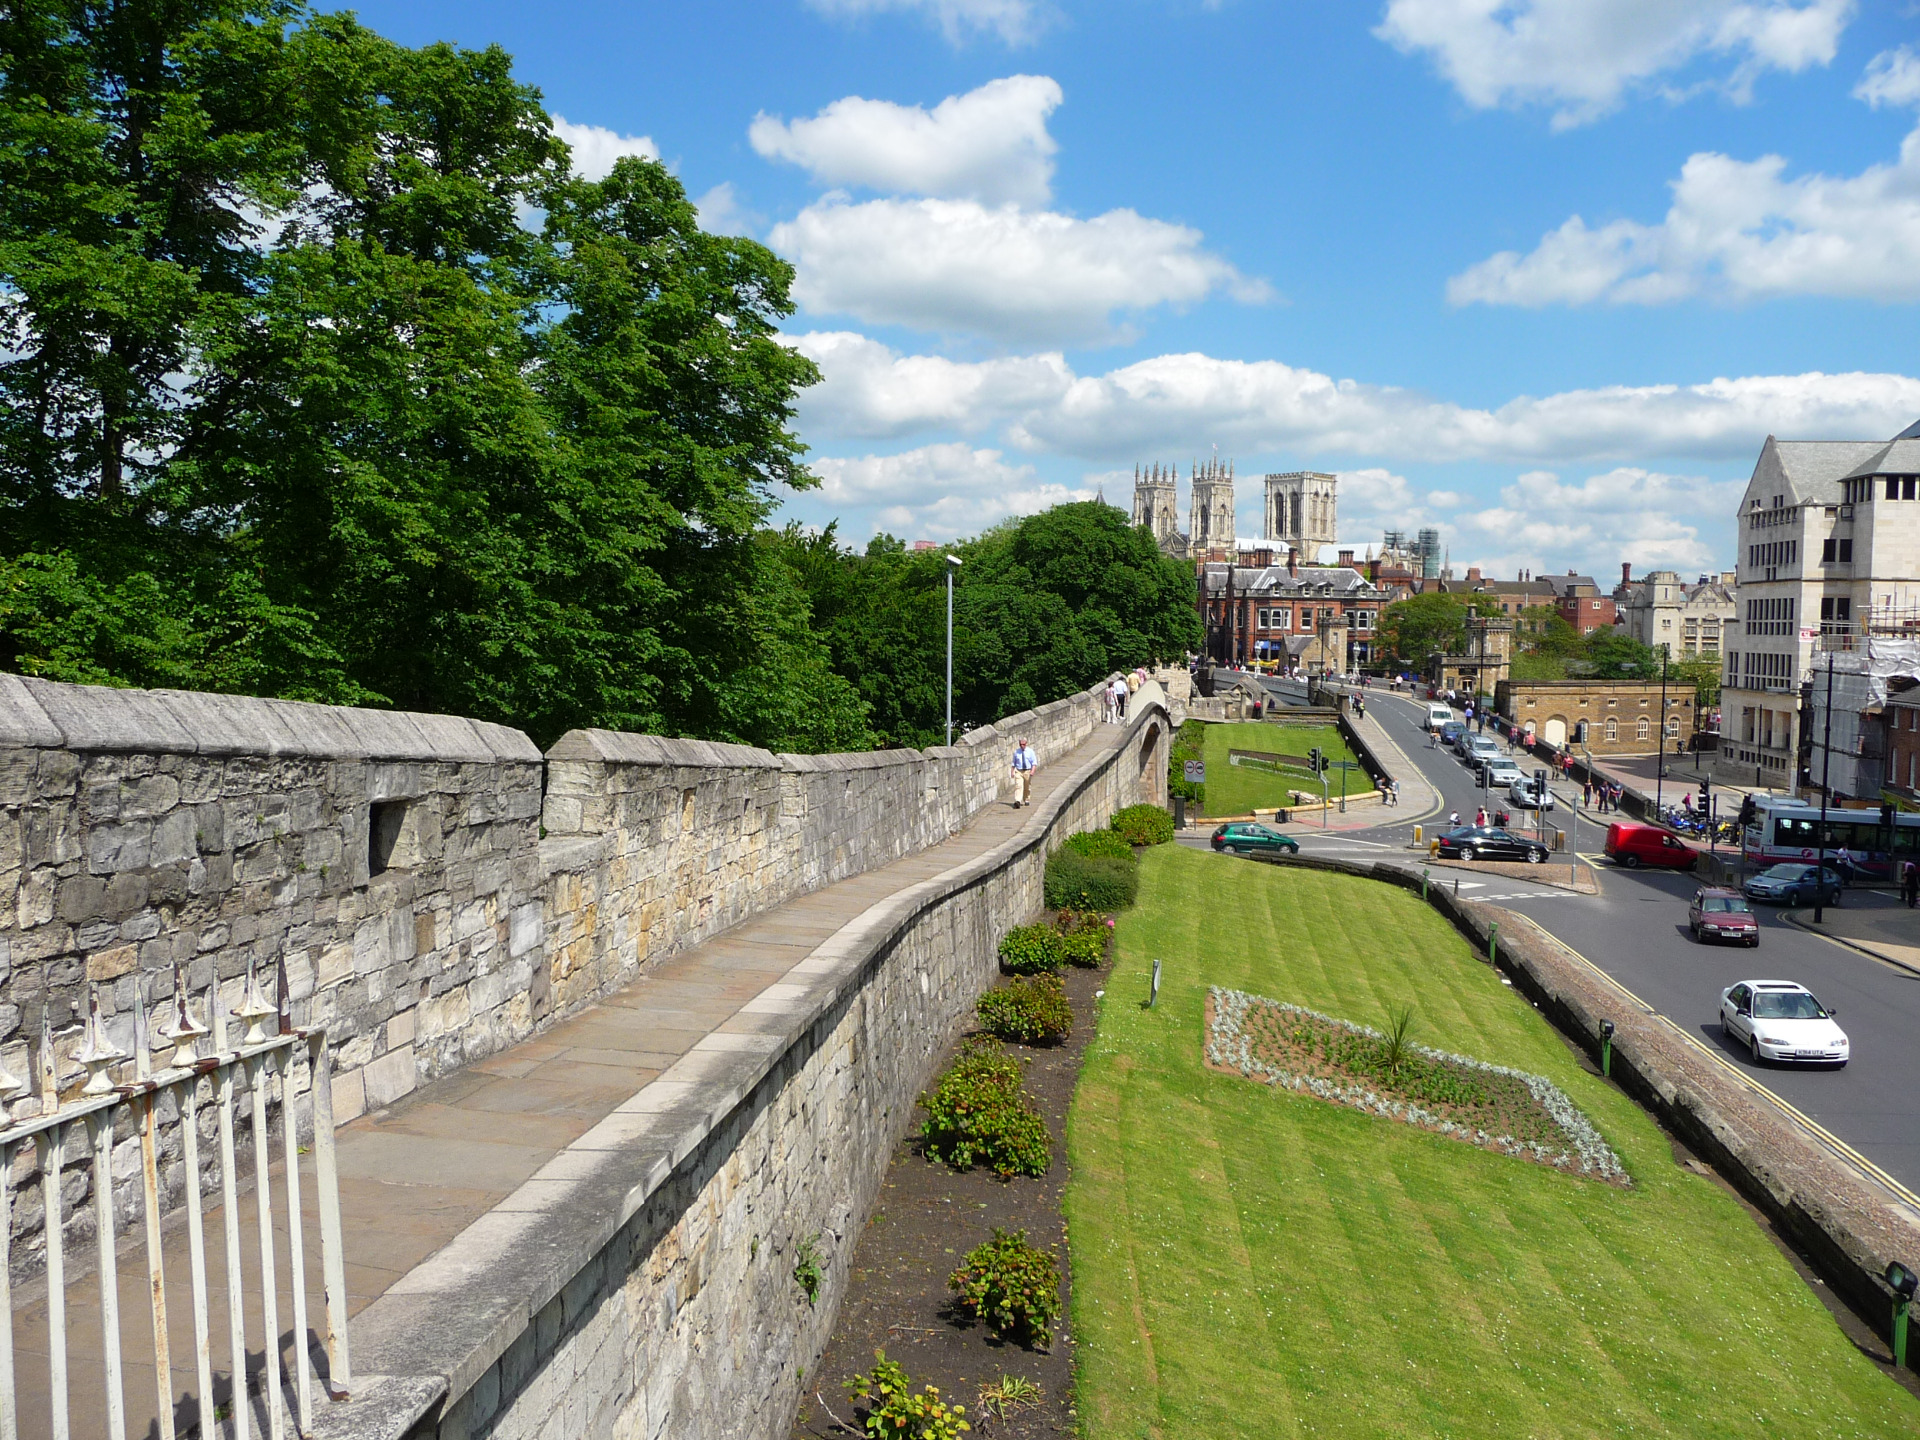 The historic walls of York